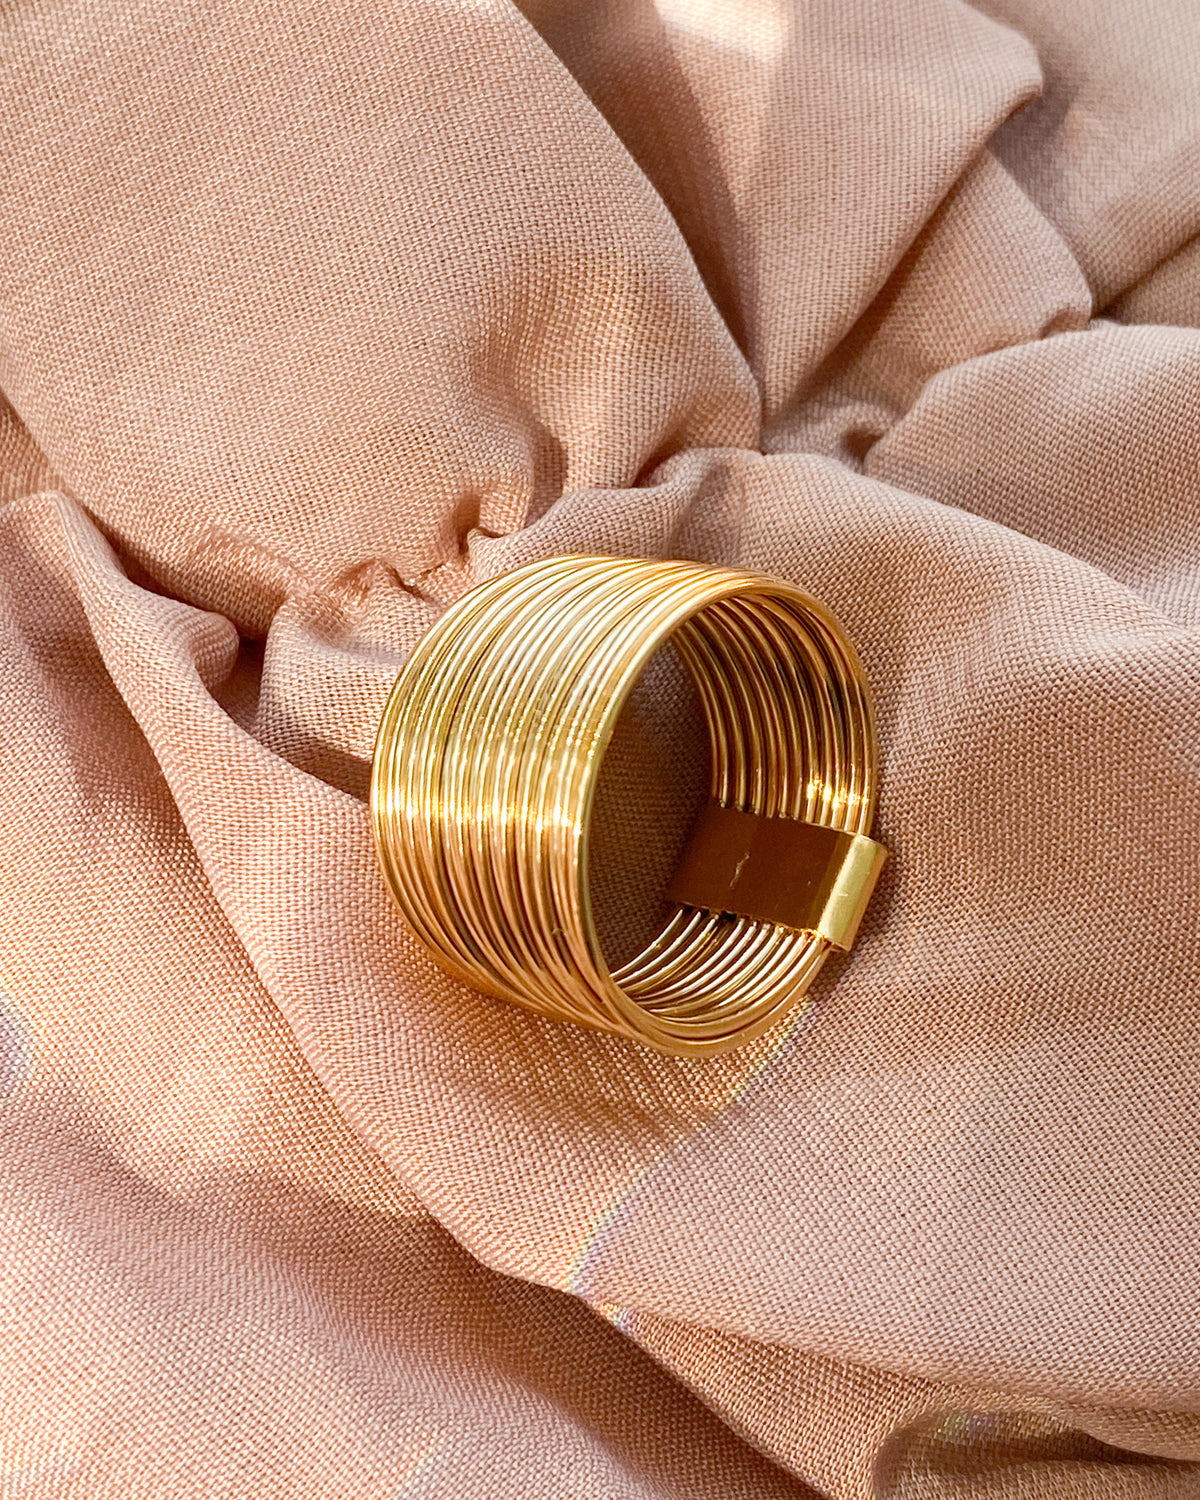 Multi-band stacking ring freeshipping - Ollijewelry